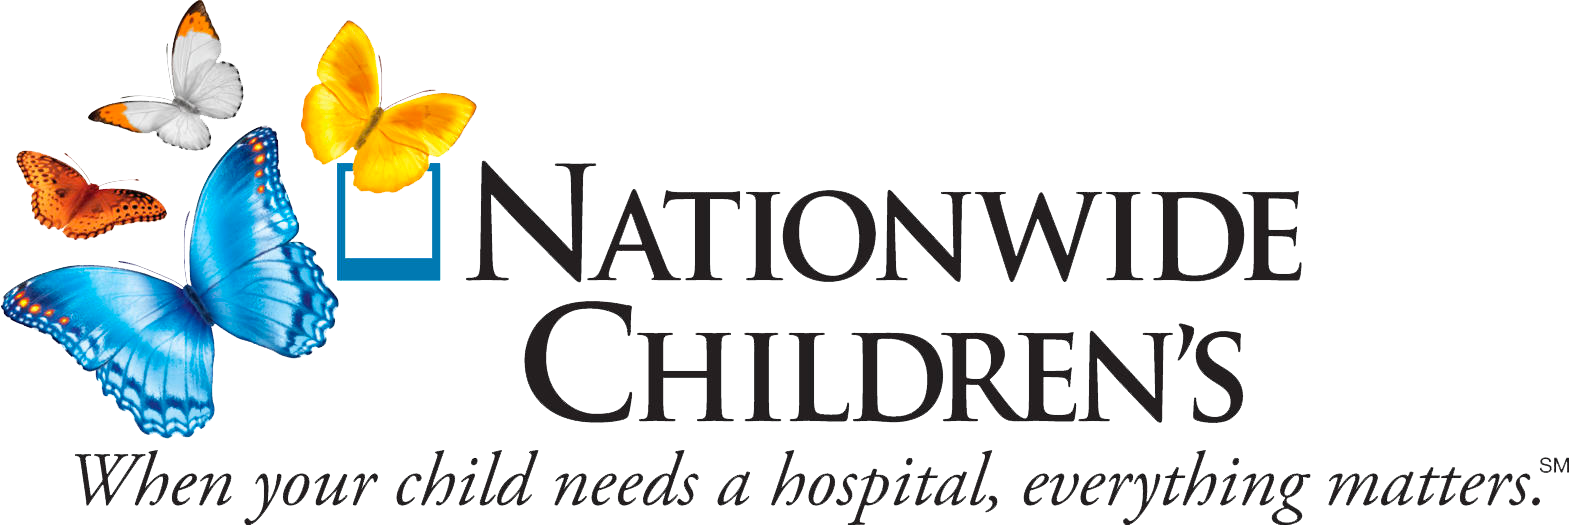 Nationwide Children’s Hospital logo